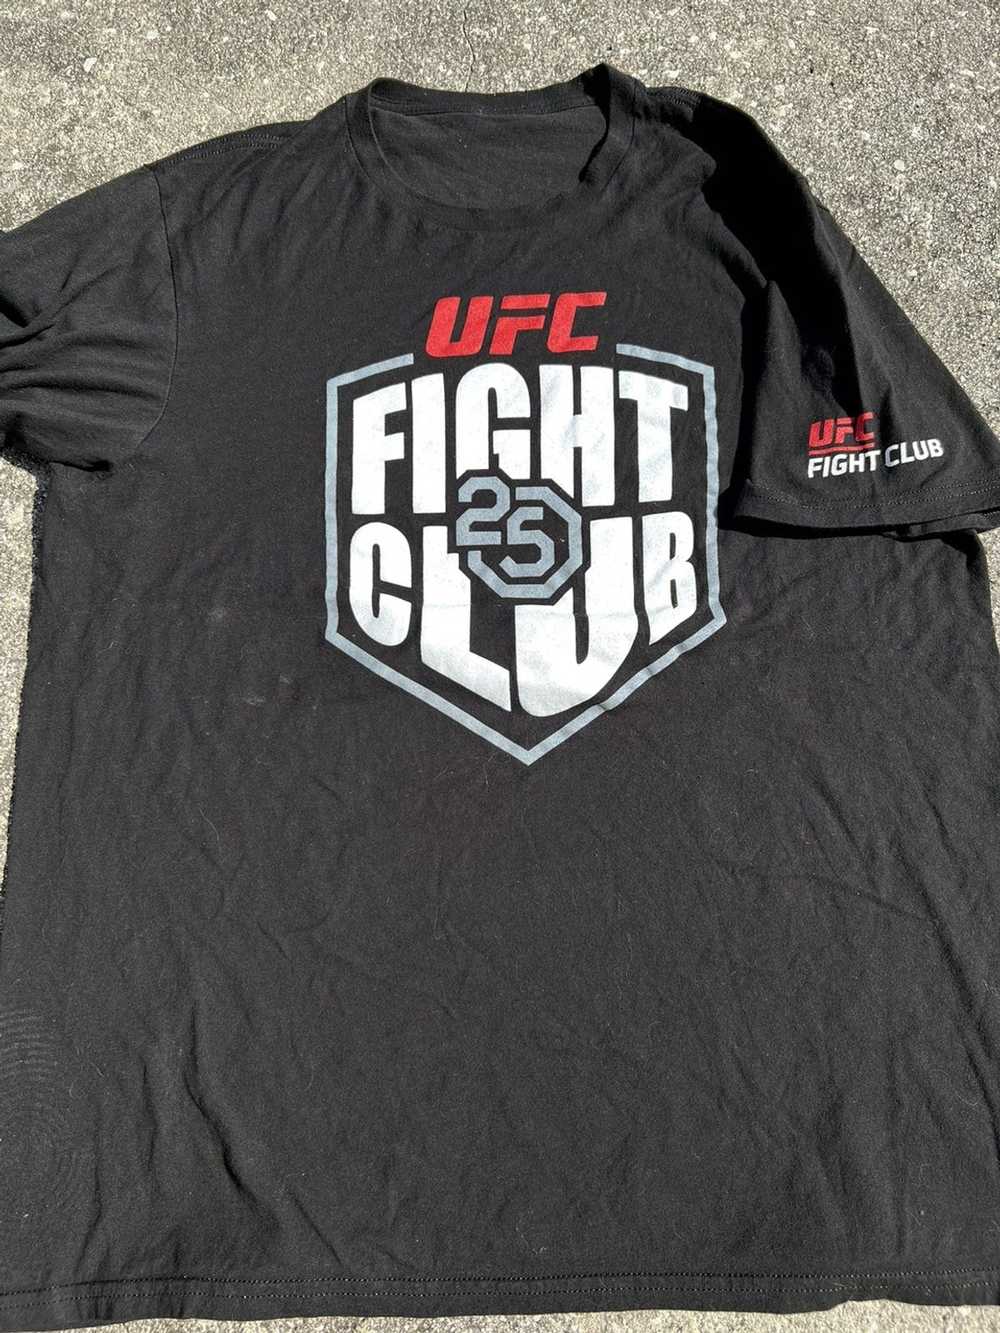 Ufc UFC Fight Club tee - image 1